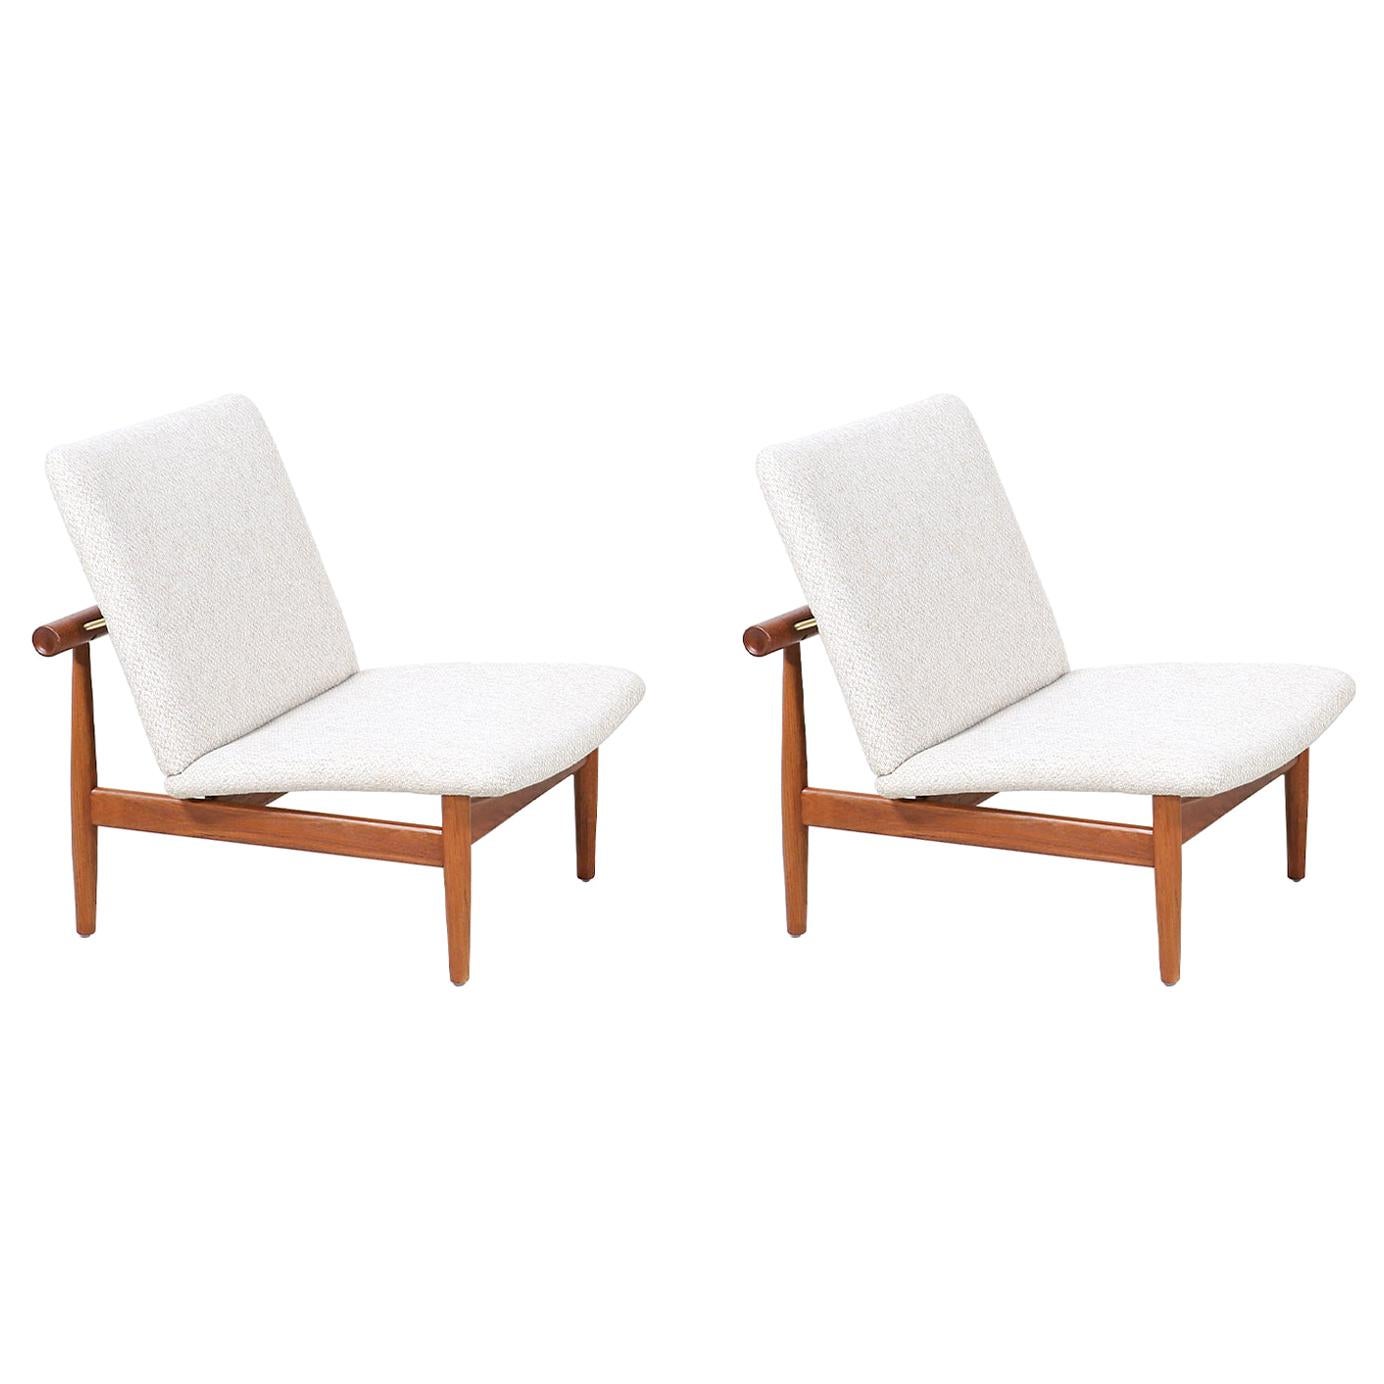 Finn Juhl "Japan" Model-137 Lounge Chairs for France & Søn